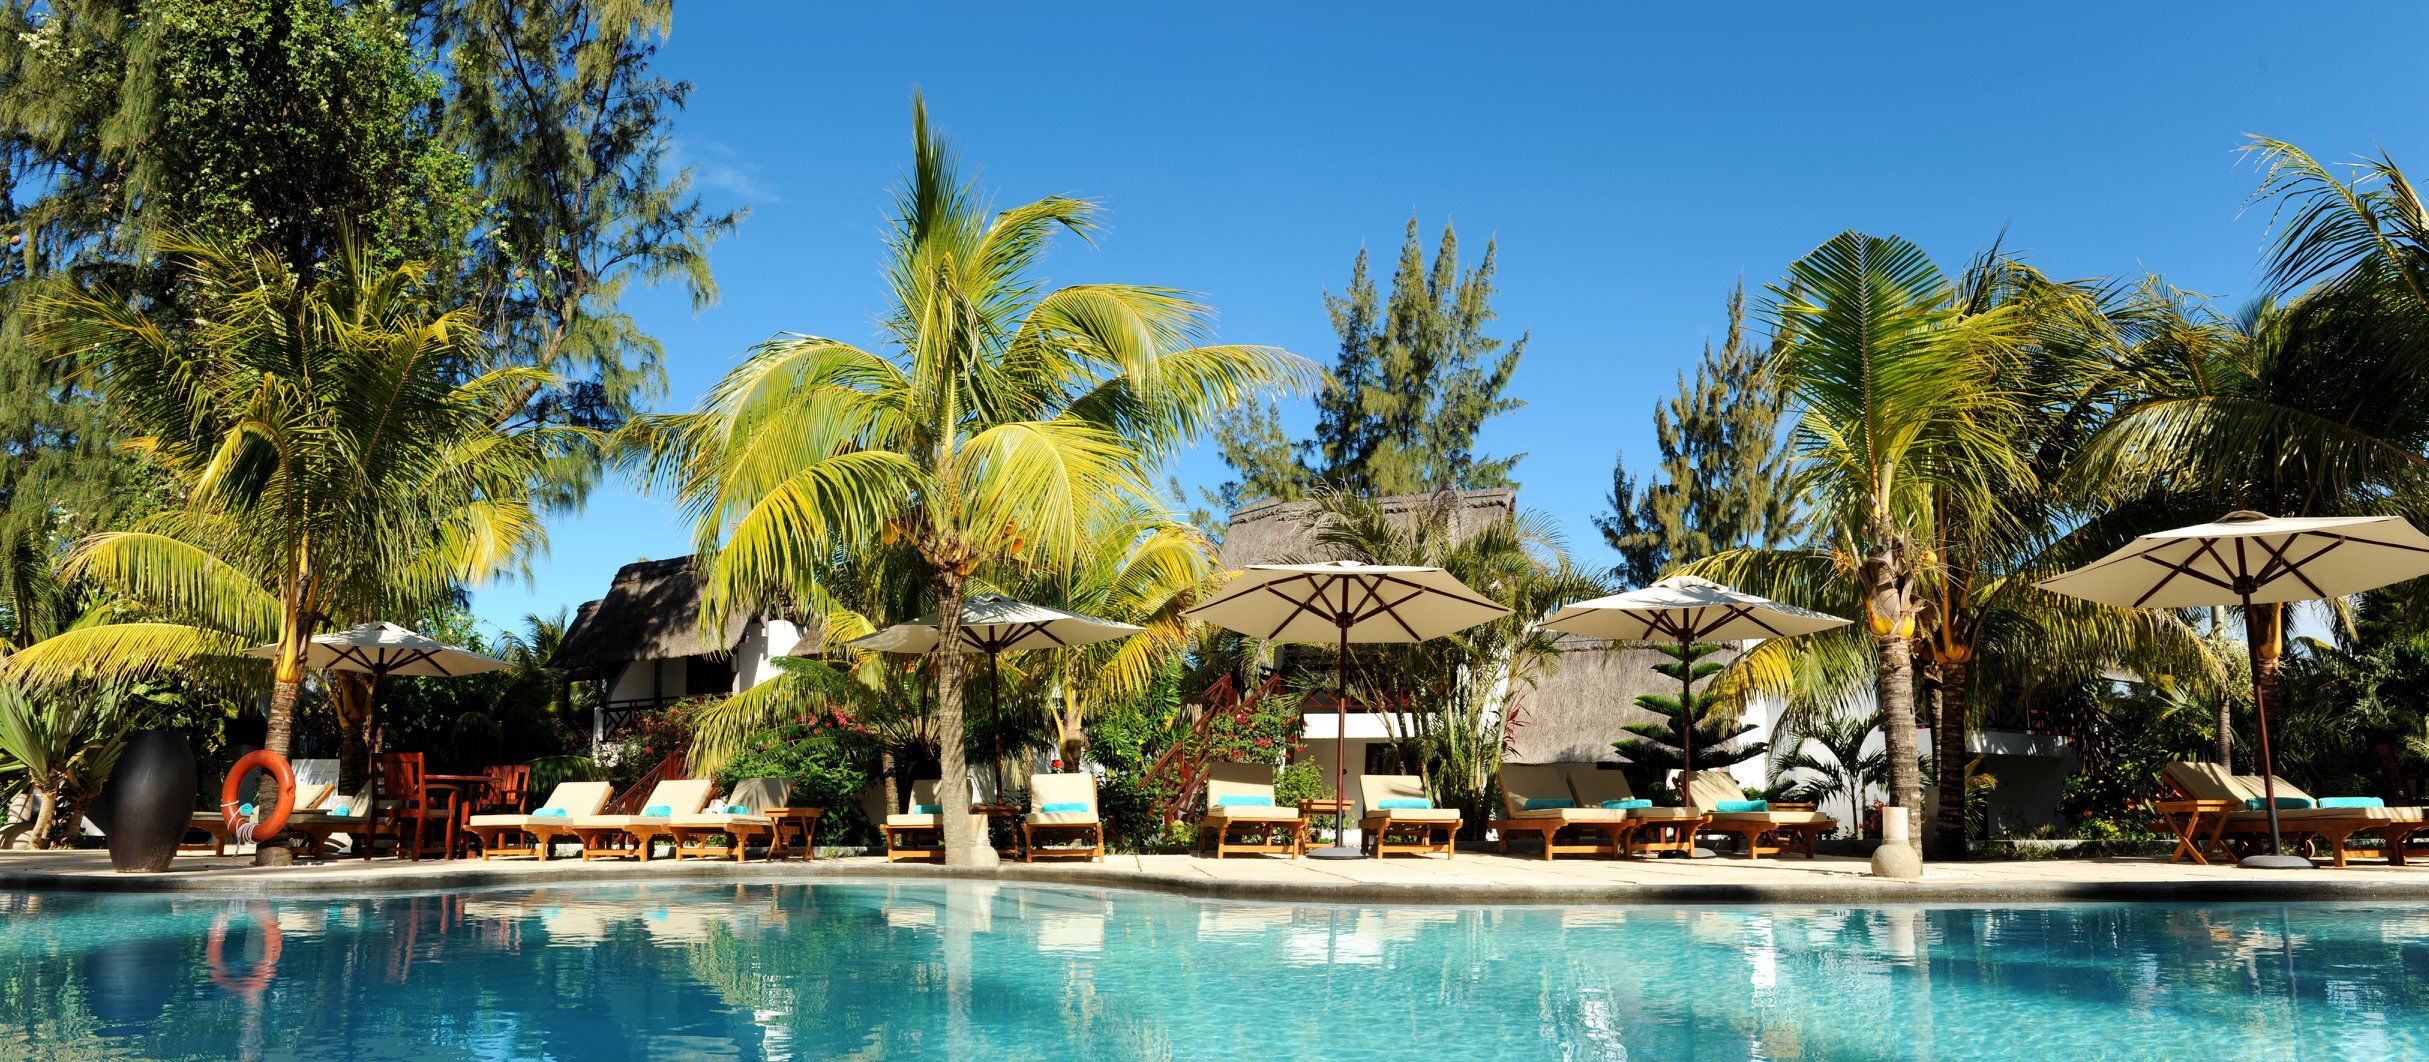 mauritius-coin-de-mire-attitude-hotel-piscina-wadi-destination.jpg